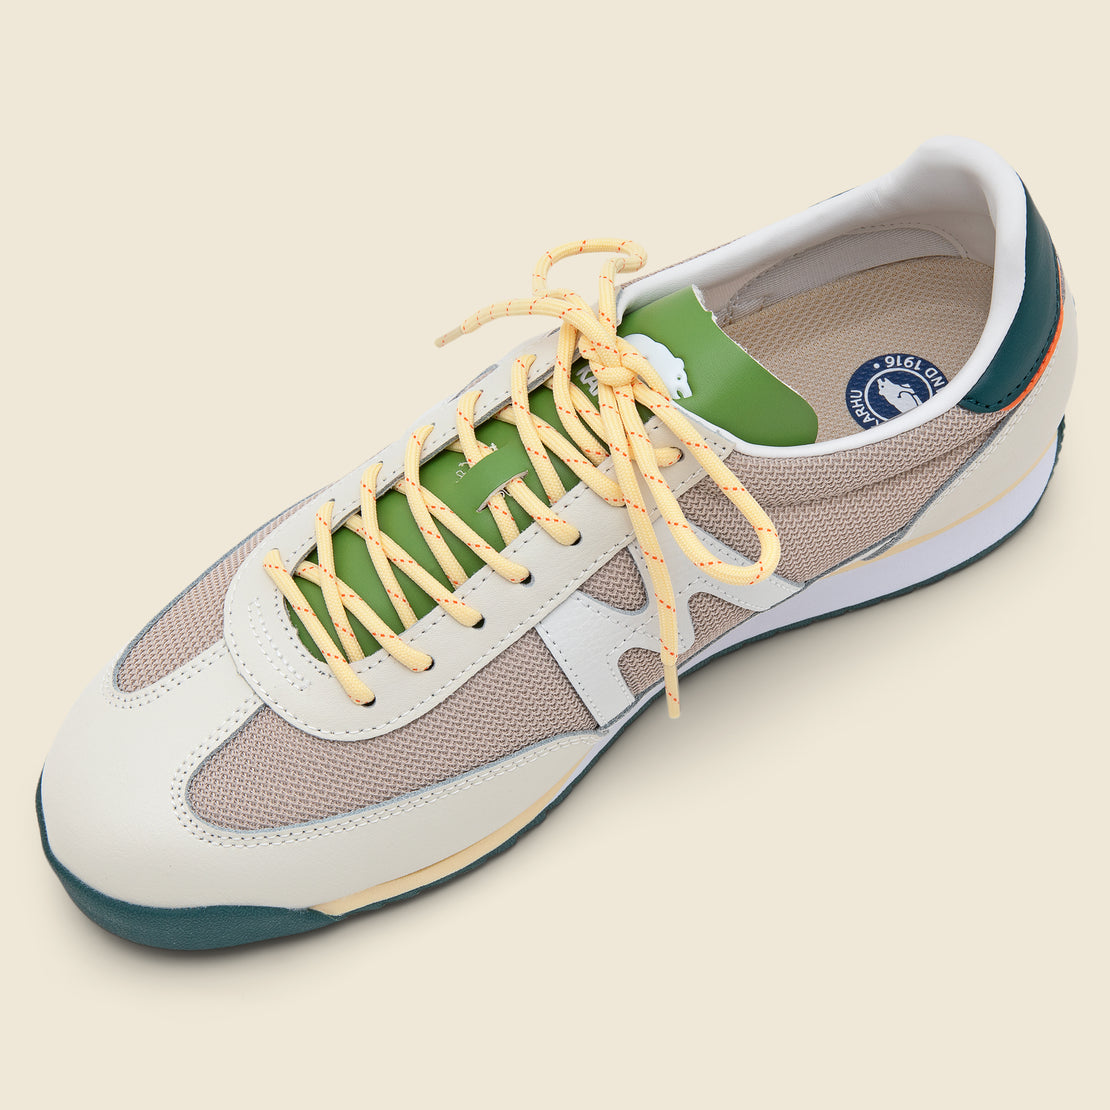 Mestari Sneaker - Lily White/Bright White - Karhu - STAG Provisions - Shoes - Athletic